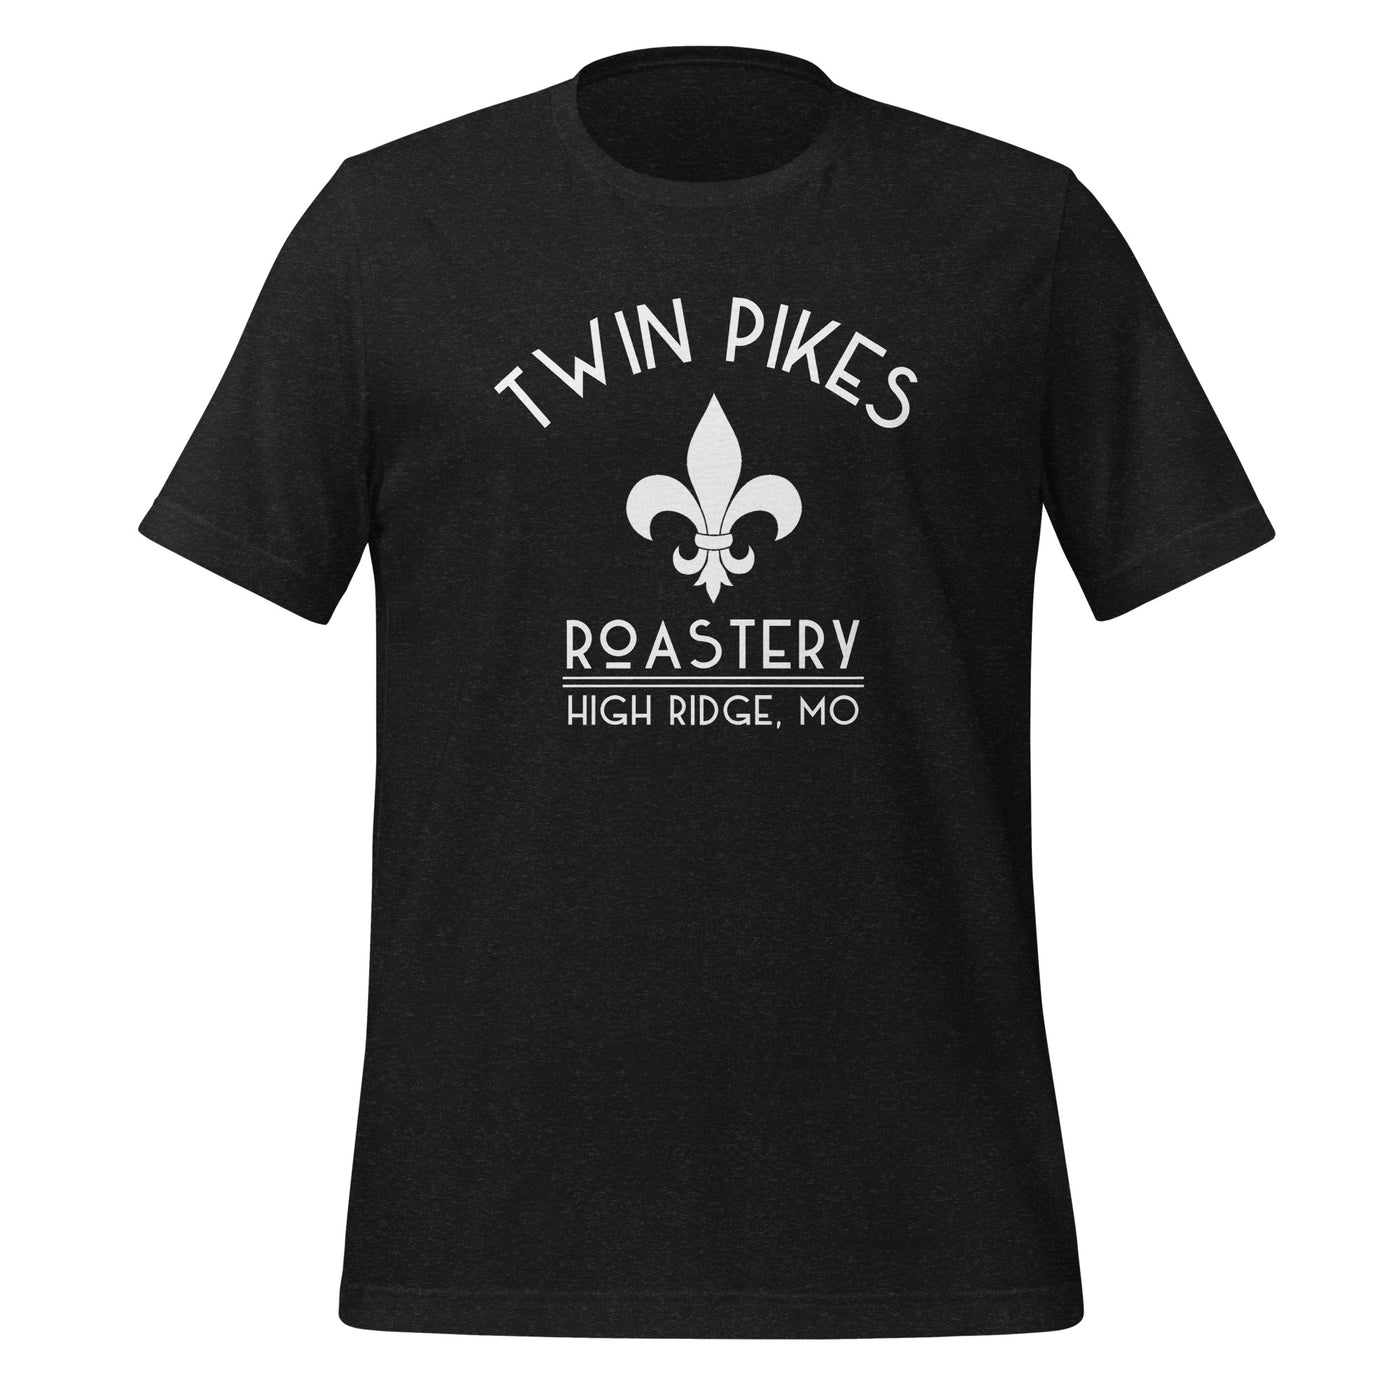 High Ridge Basic t-shirt -  Twin Pikes Roastery